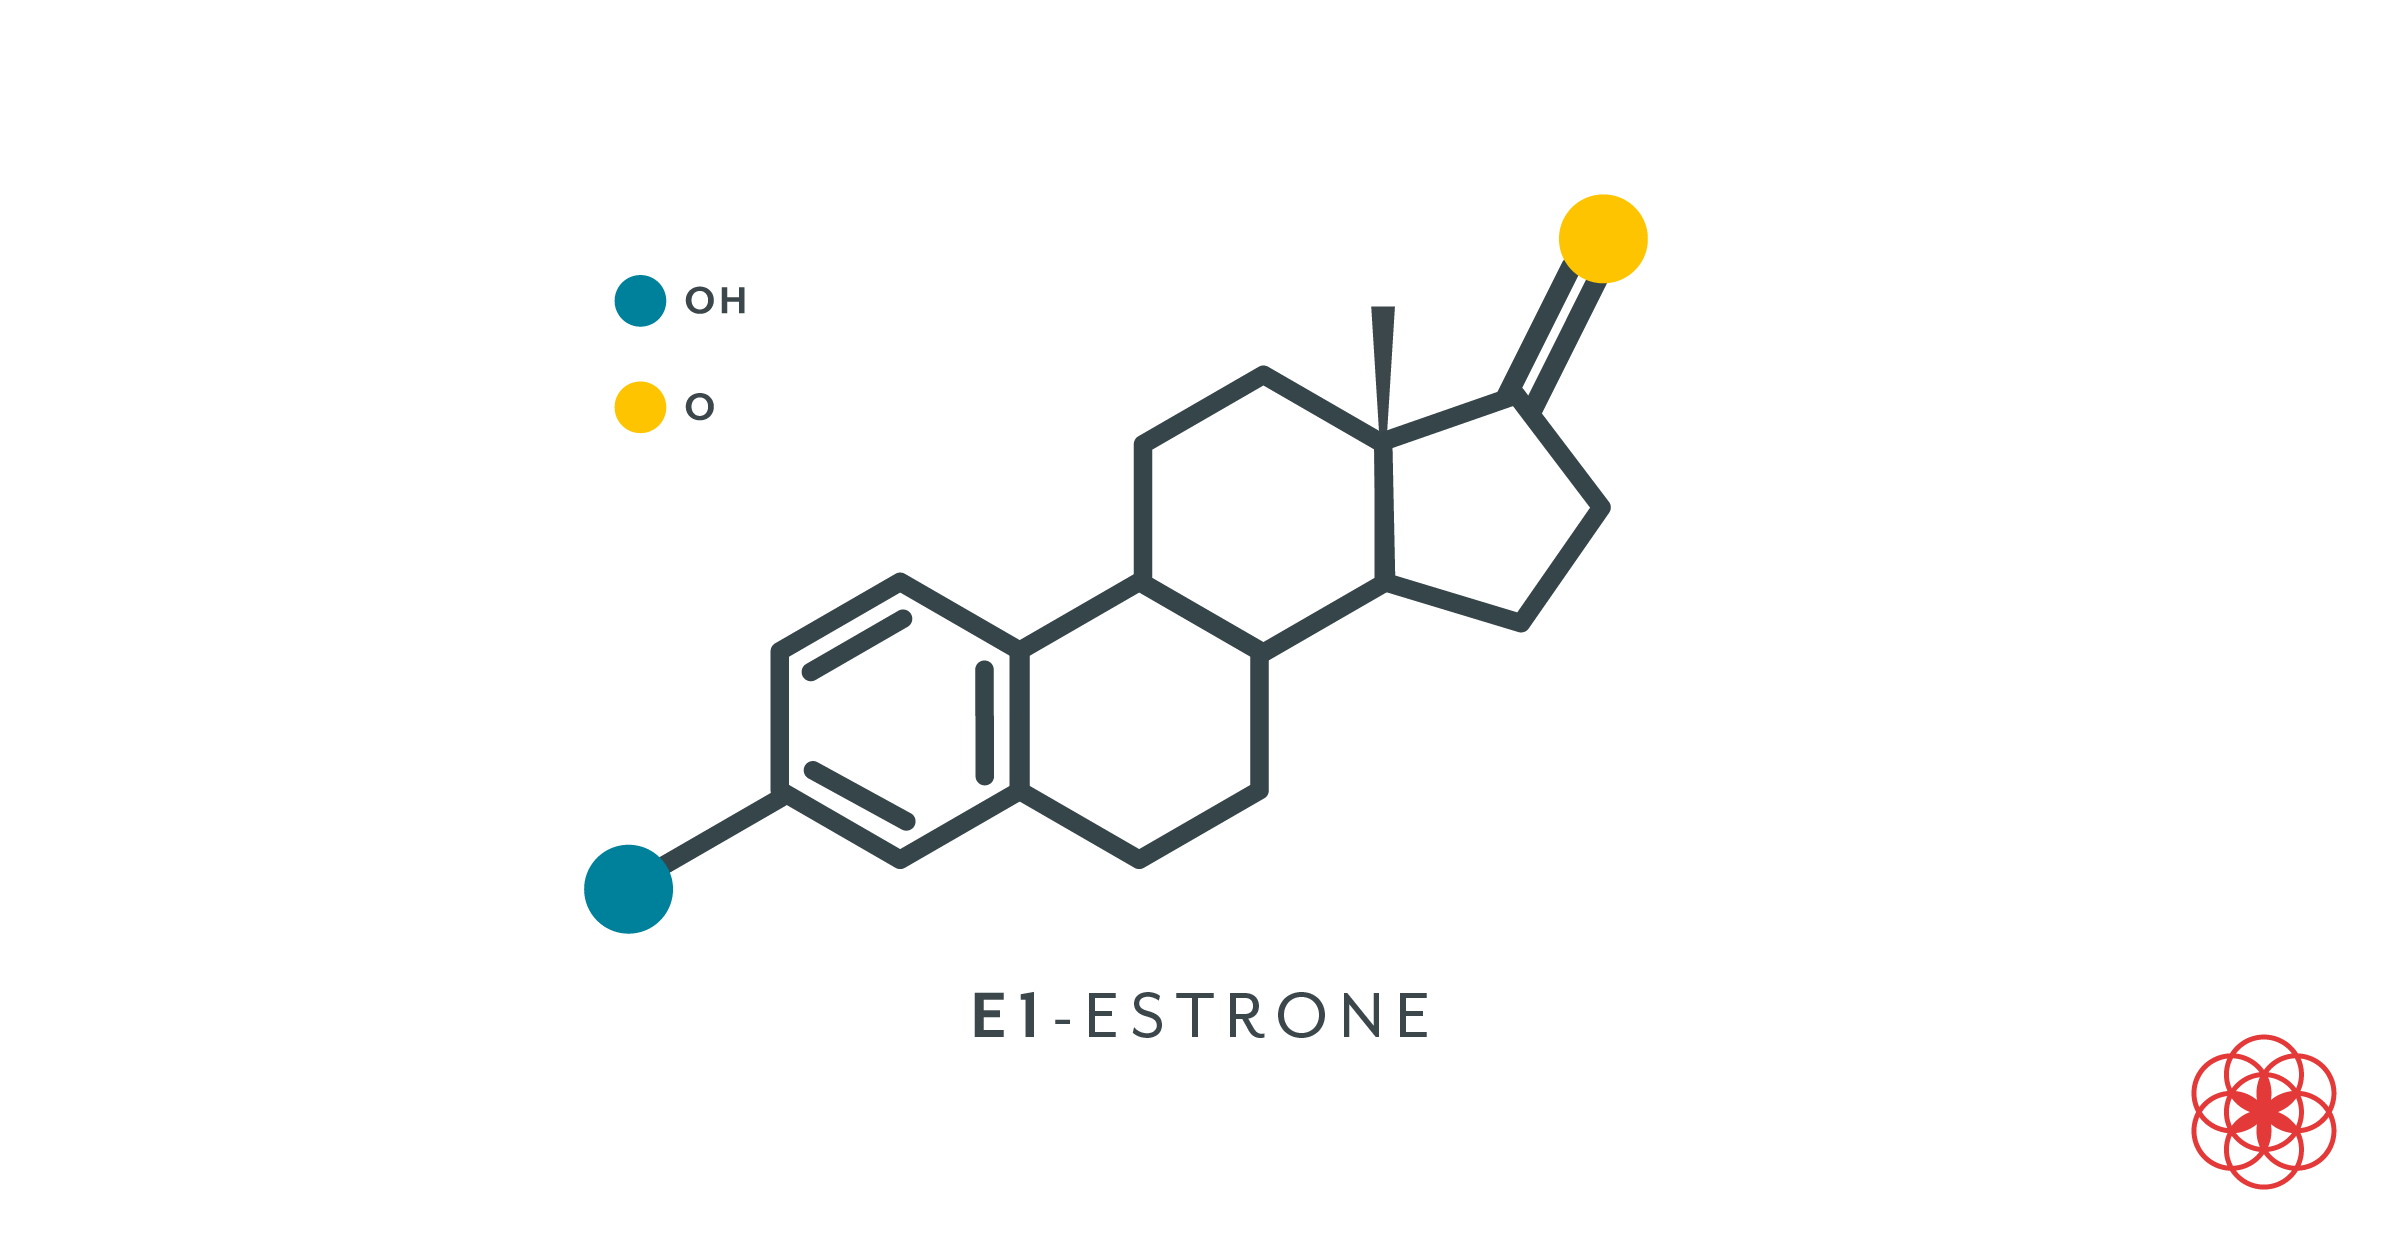 Estrogen Definition Symptoms And More